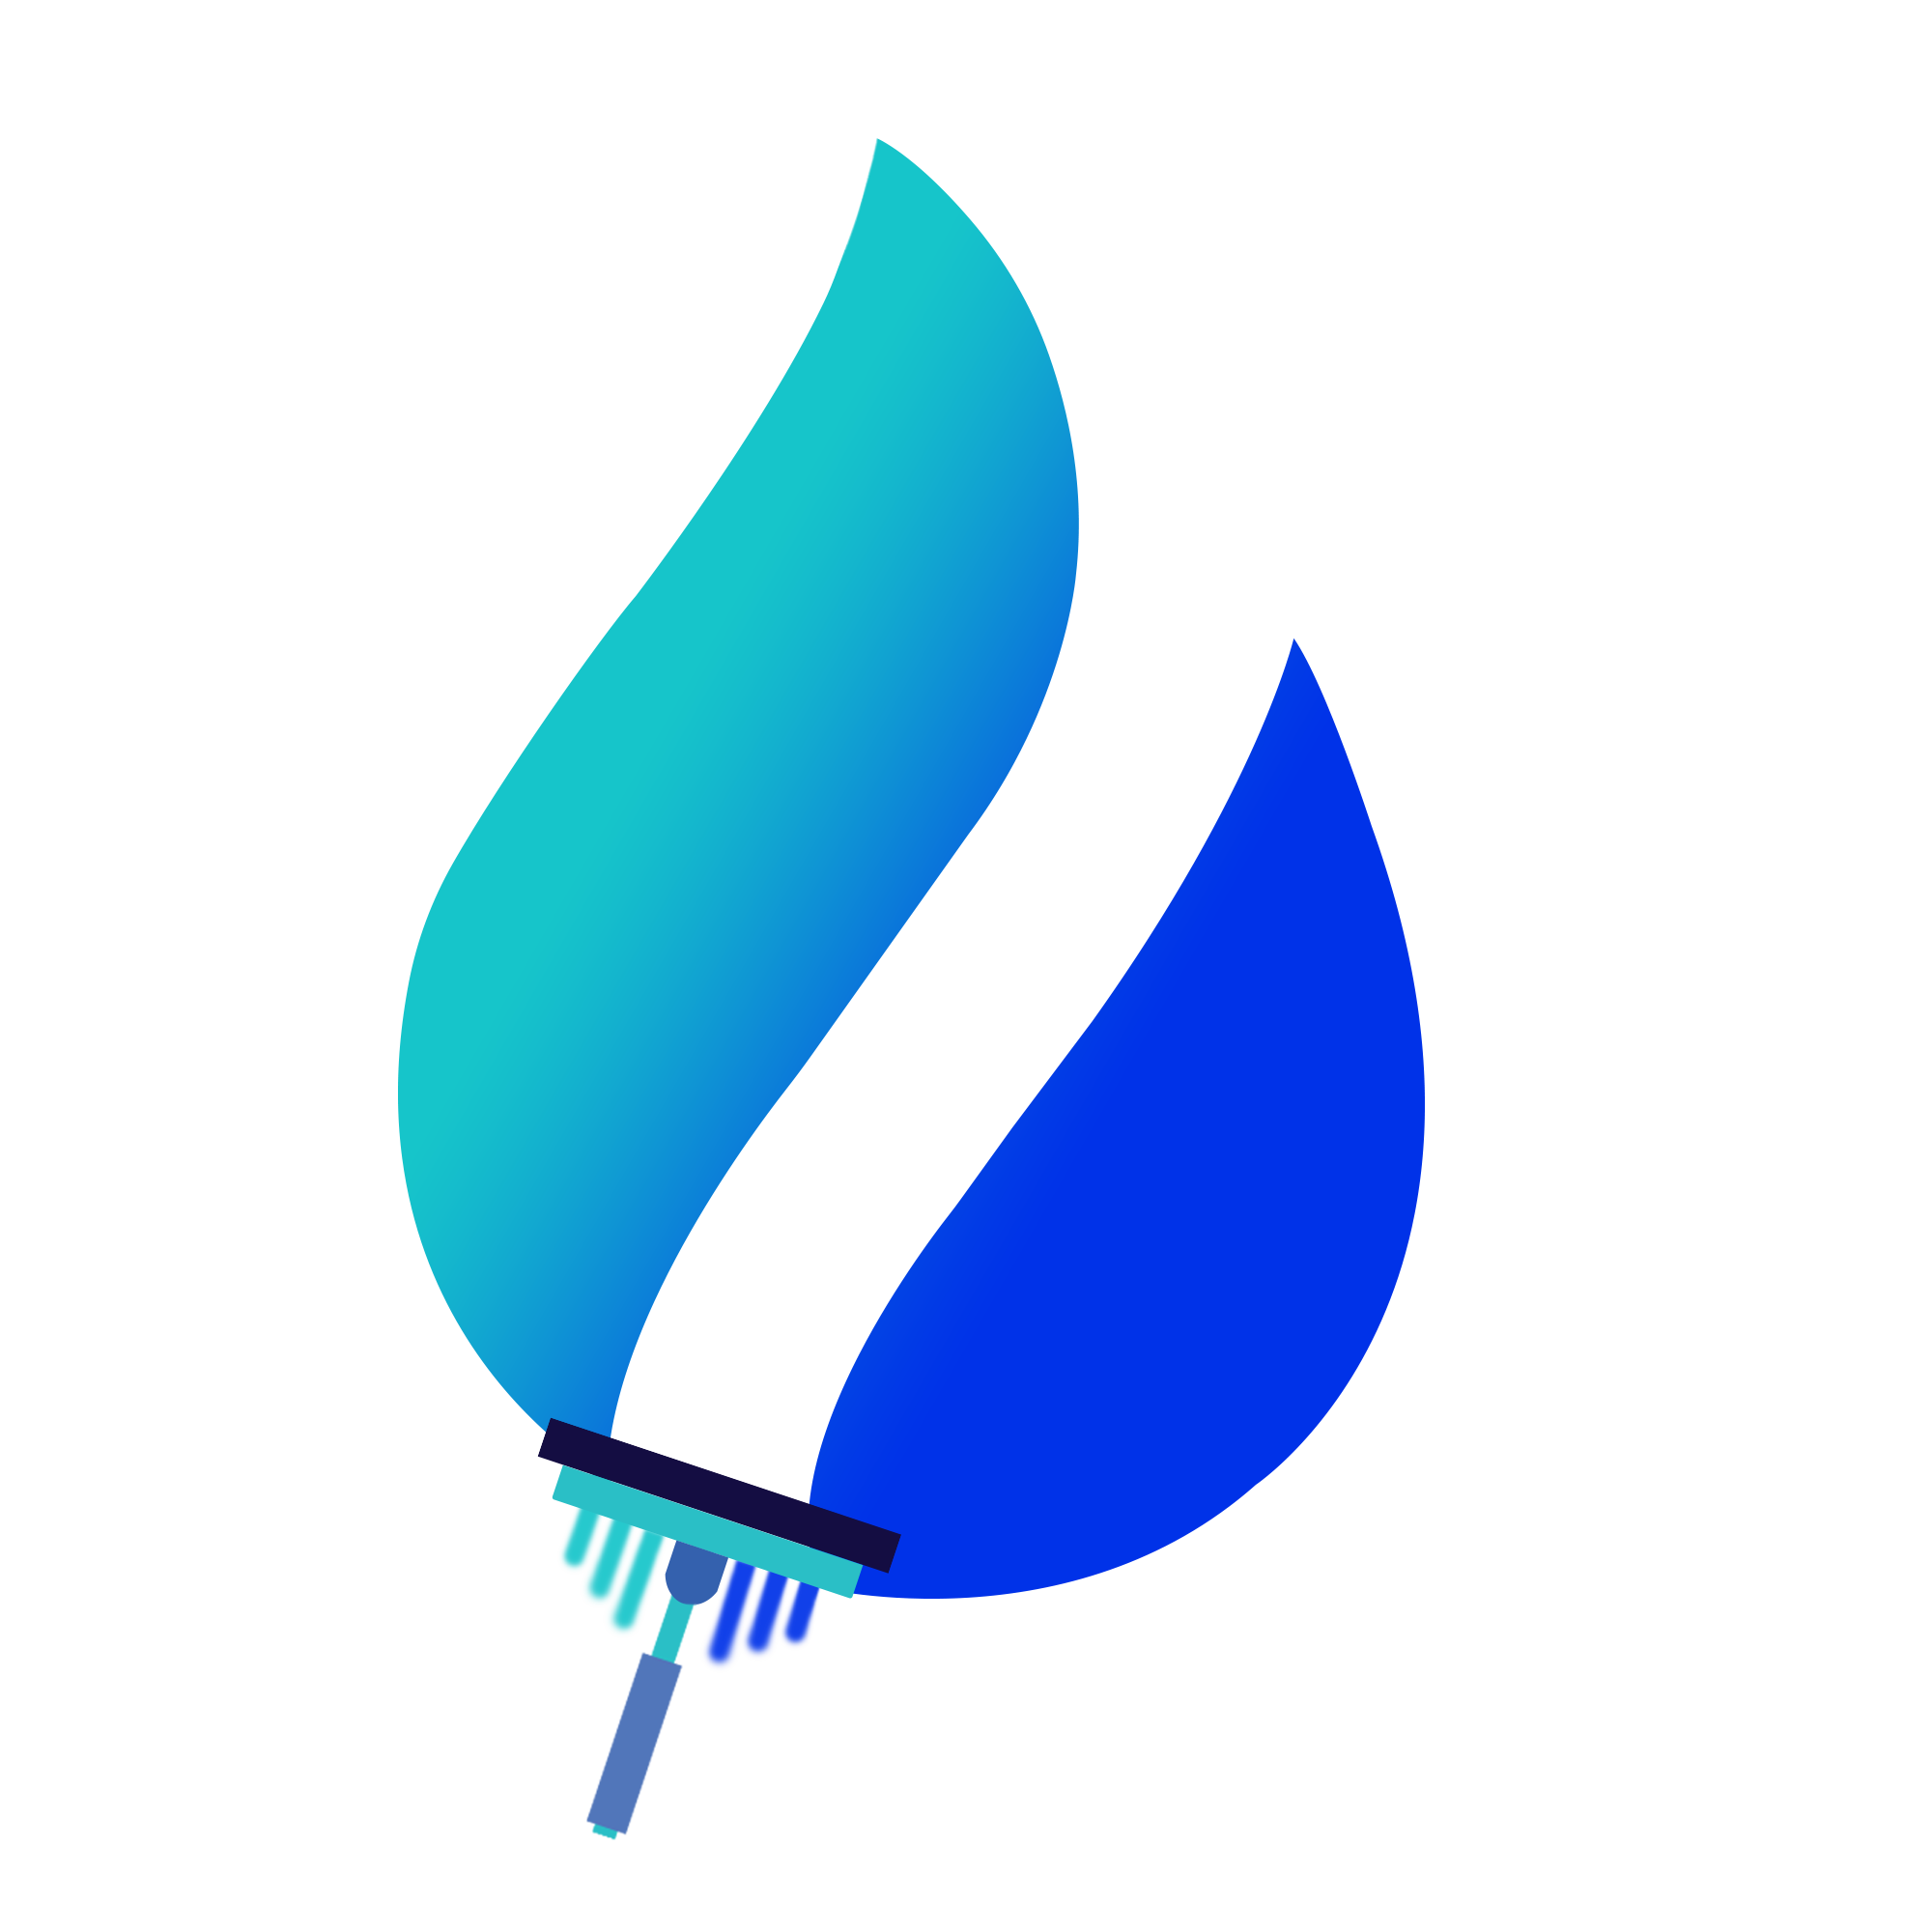 PCC Reinigung GmbH logo, it is a blue water drop